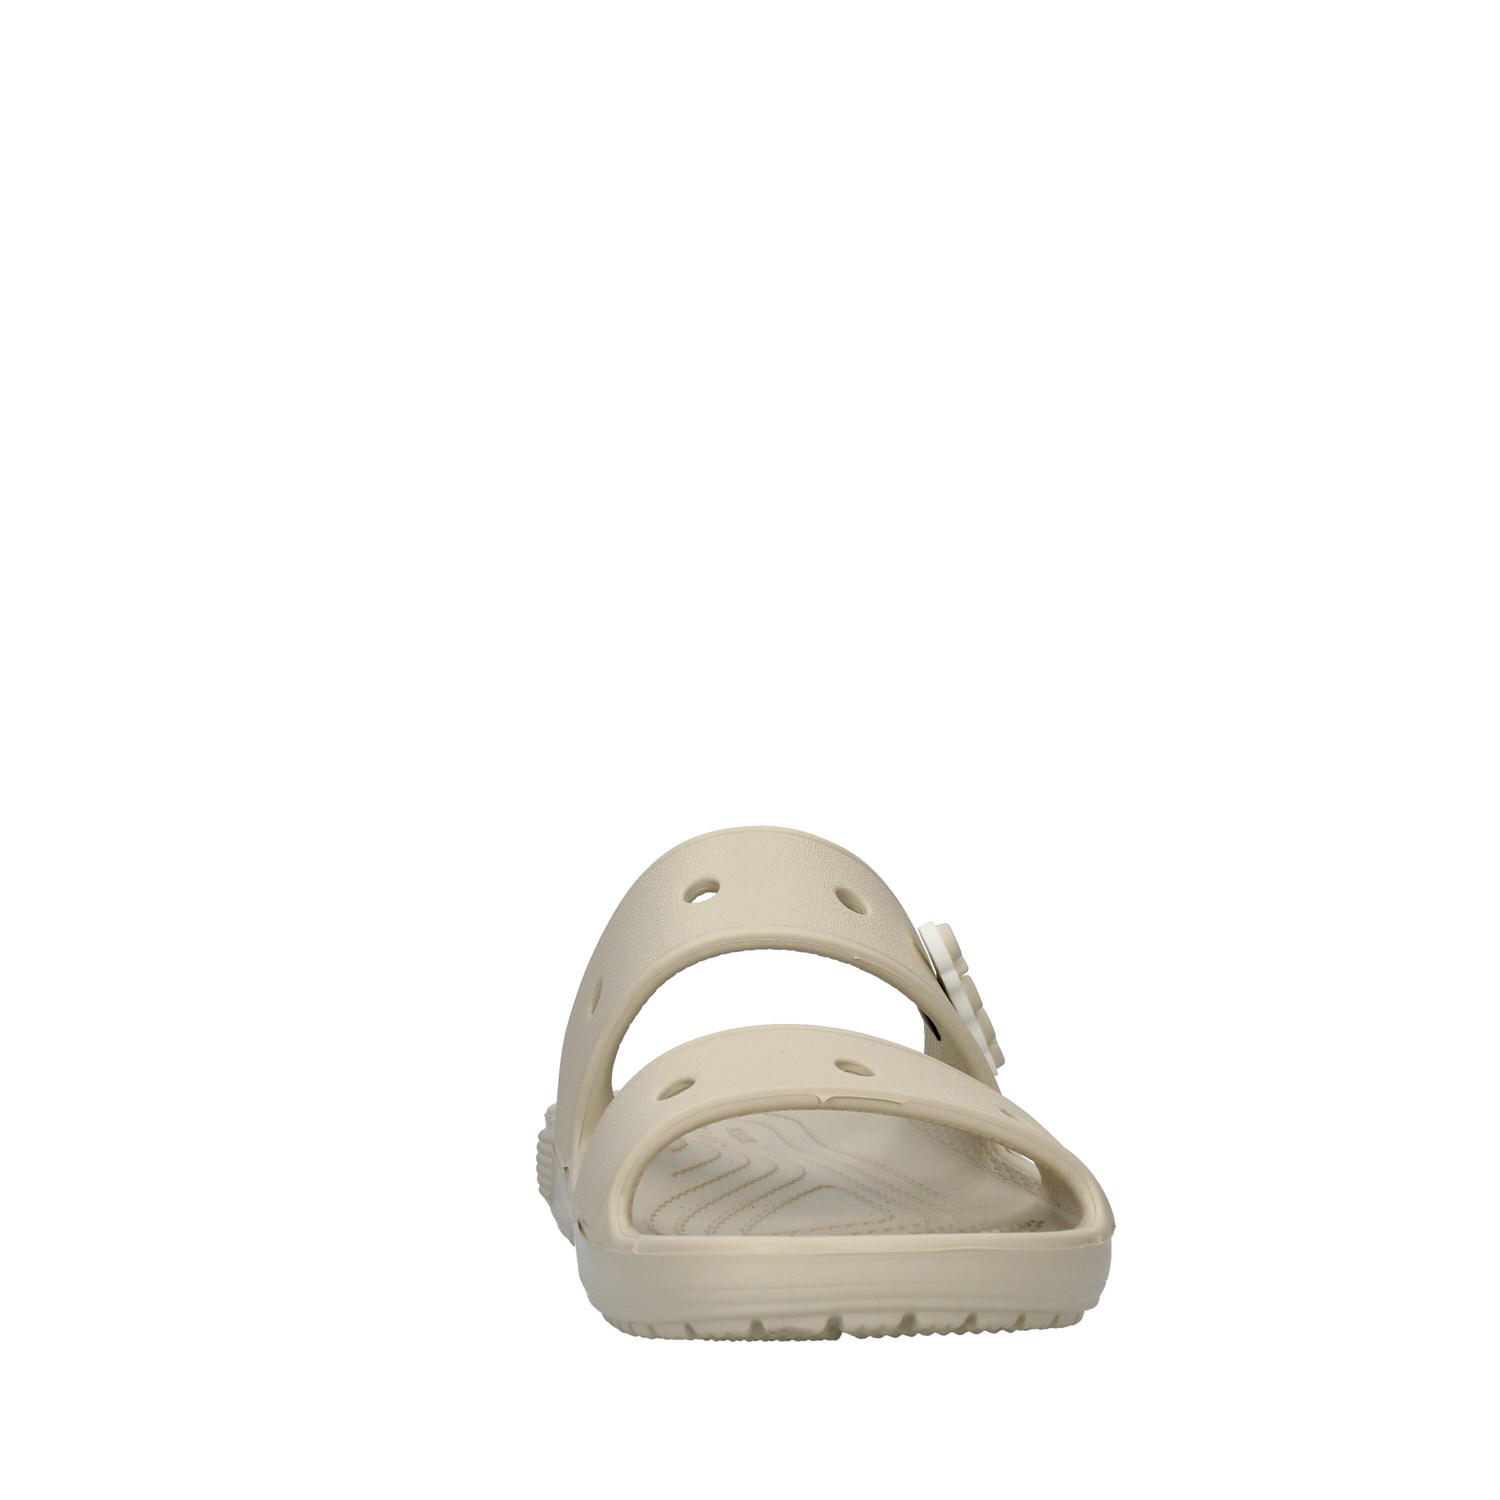 Crocs Shoes Woman Beachwear BEIGE 206761